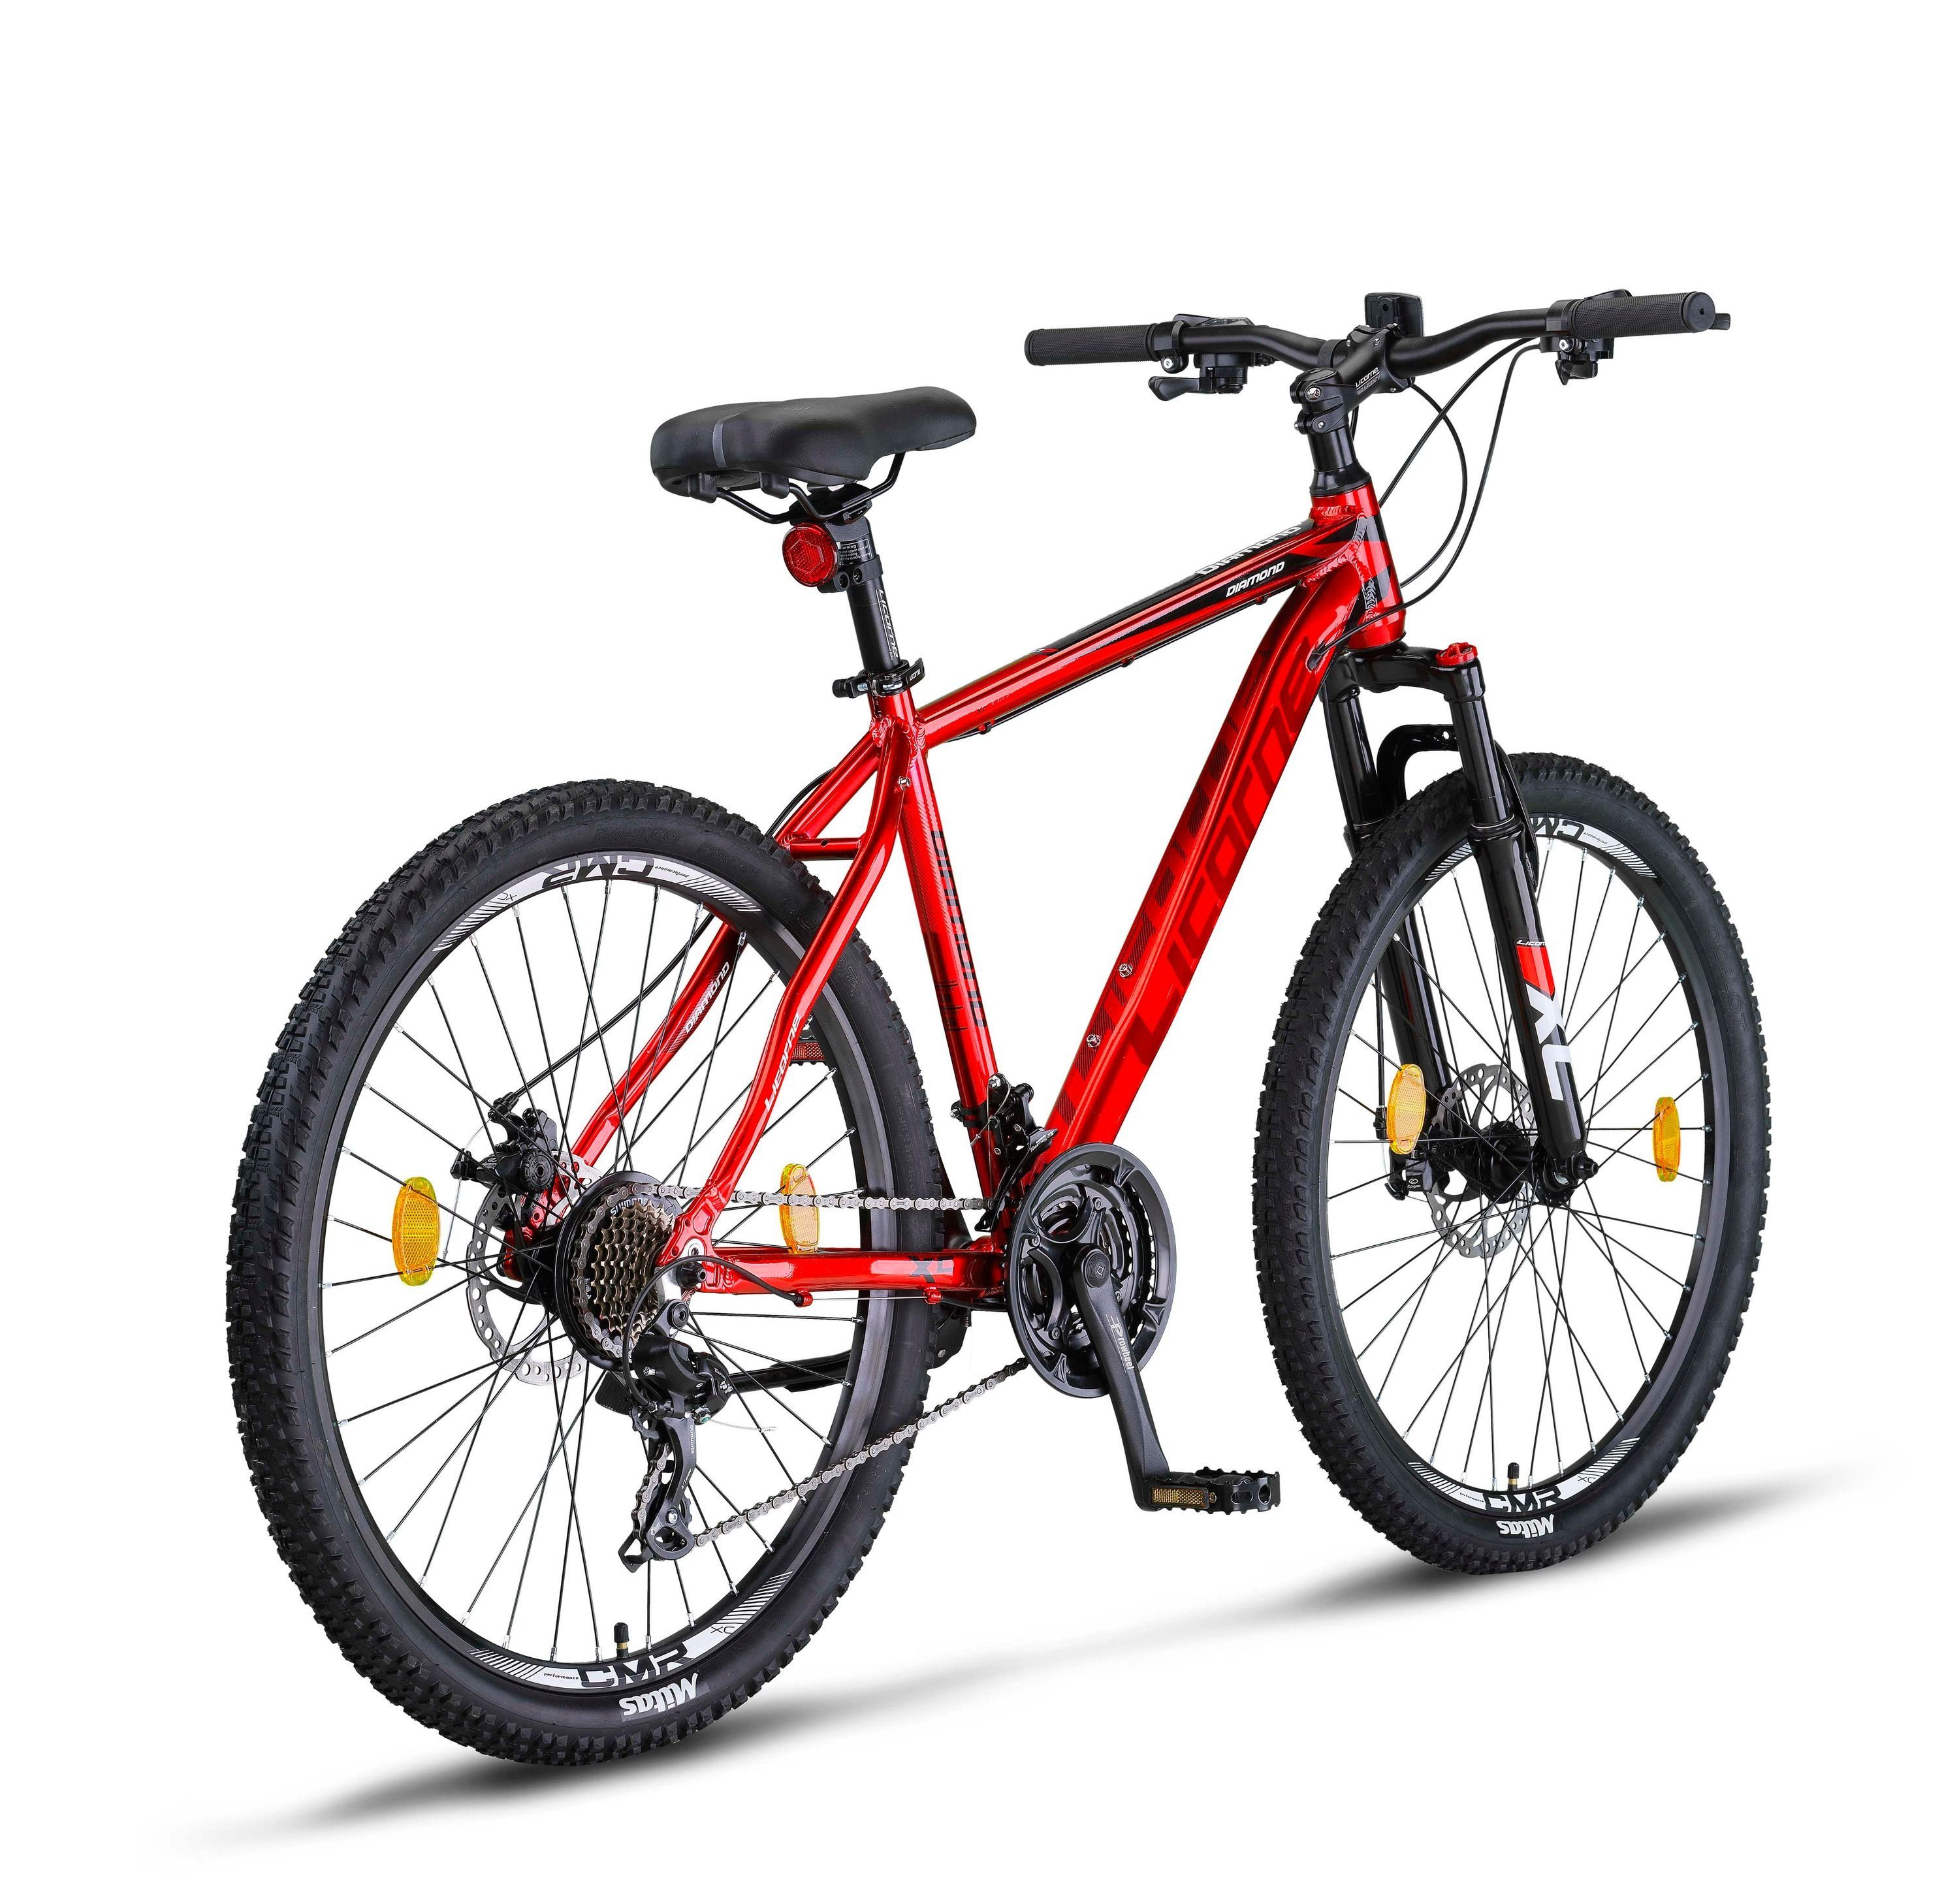 Licorne Mountainbike 21 Diamond 26, Bike Rot Zoll, Mountainbike Premium Bike Alu Gang und Licorne 27.5 29